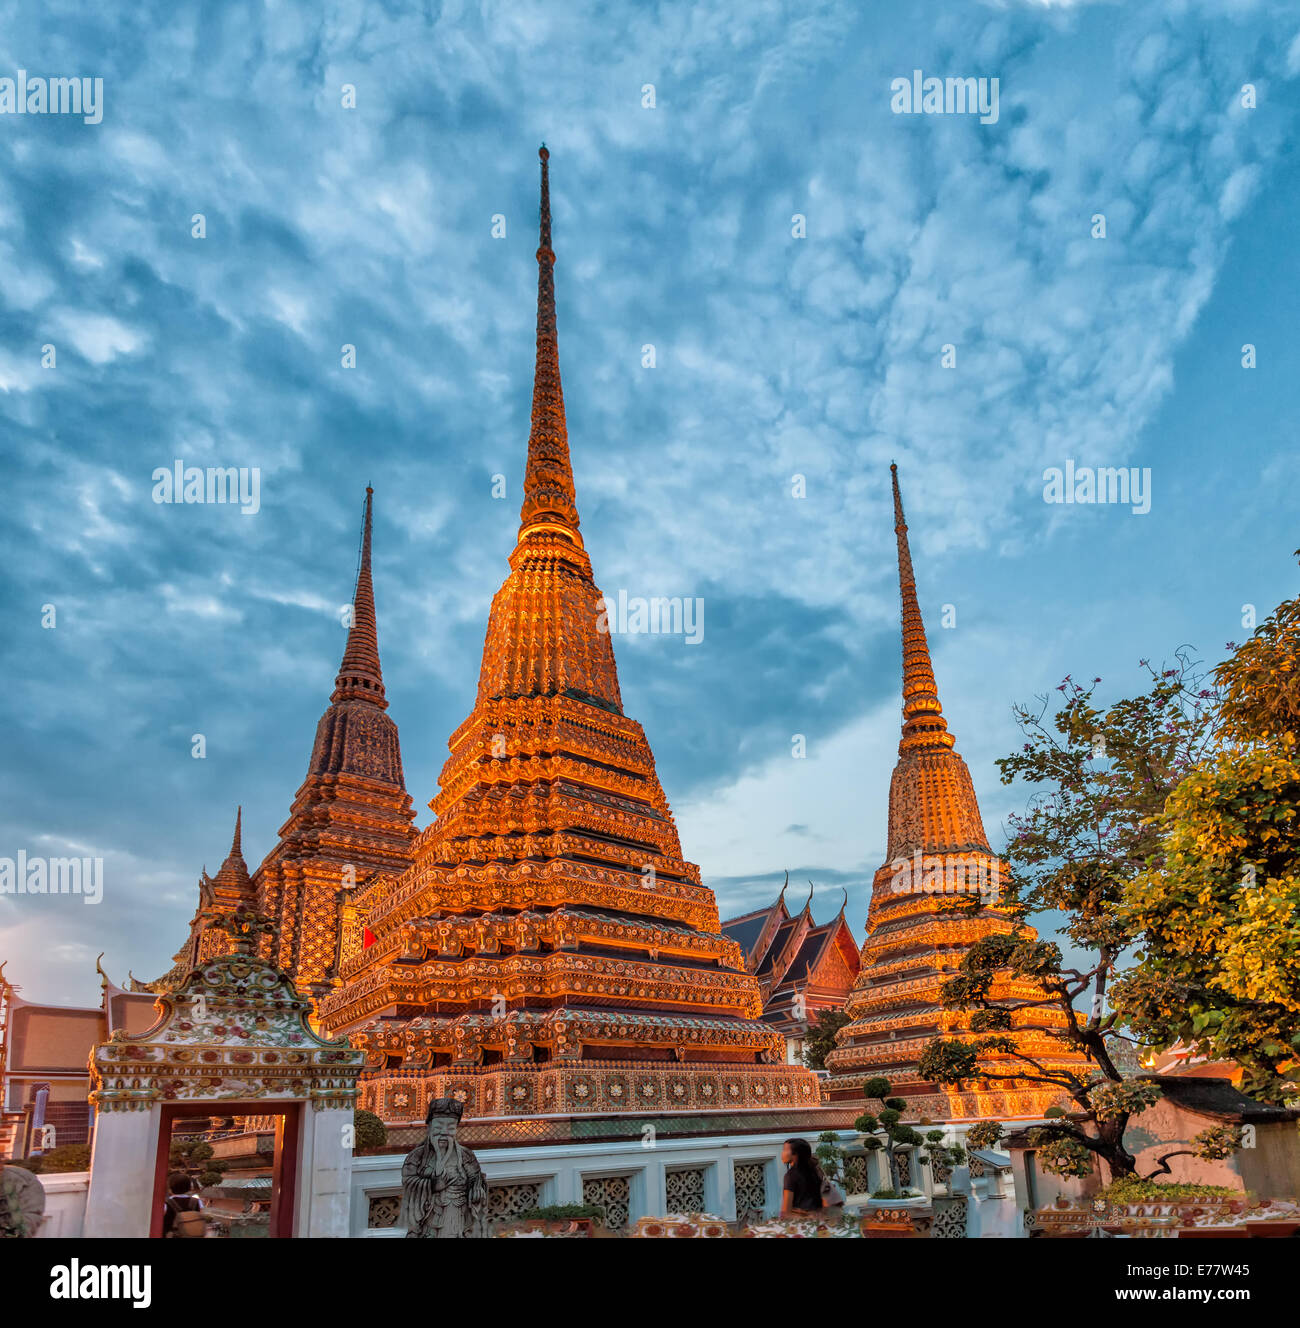 Wat Pho temple, Bangkok, Thailand. The Temple of the Reclining Buddha. Stock Photo